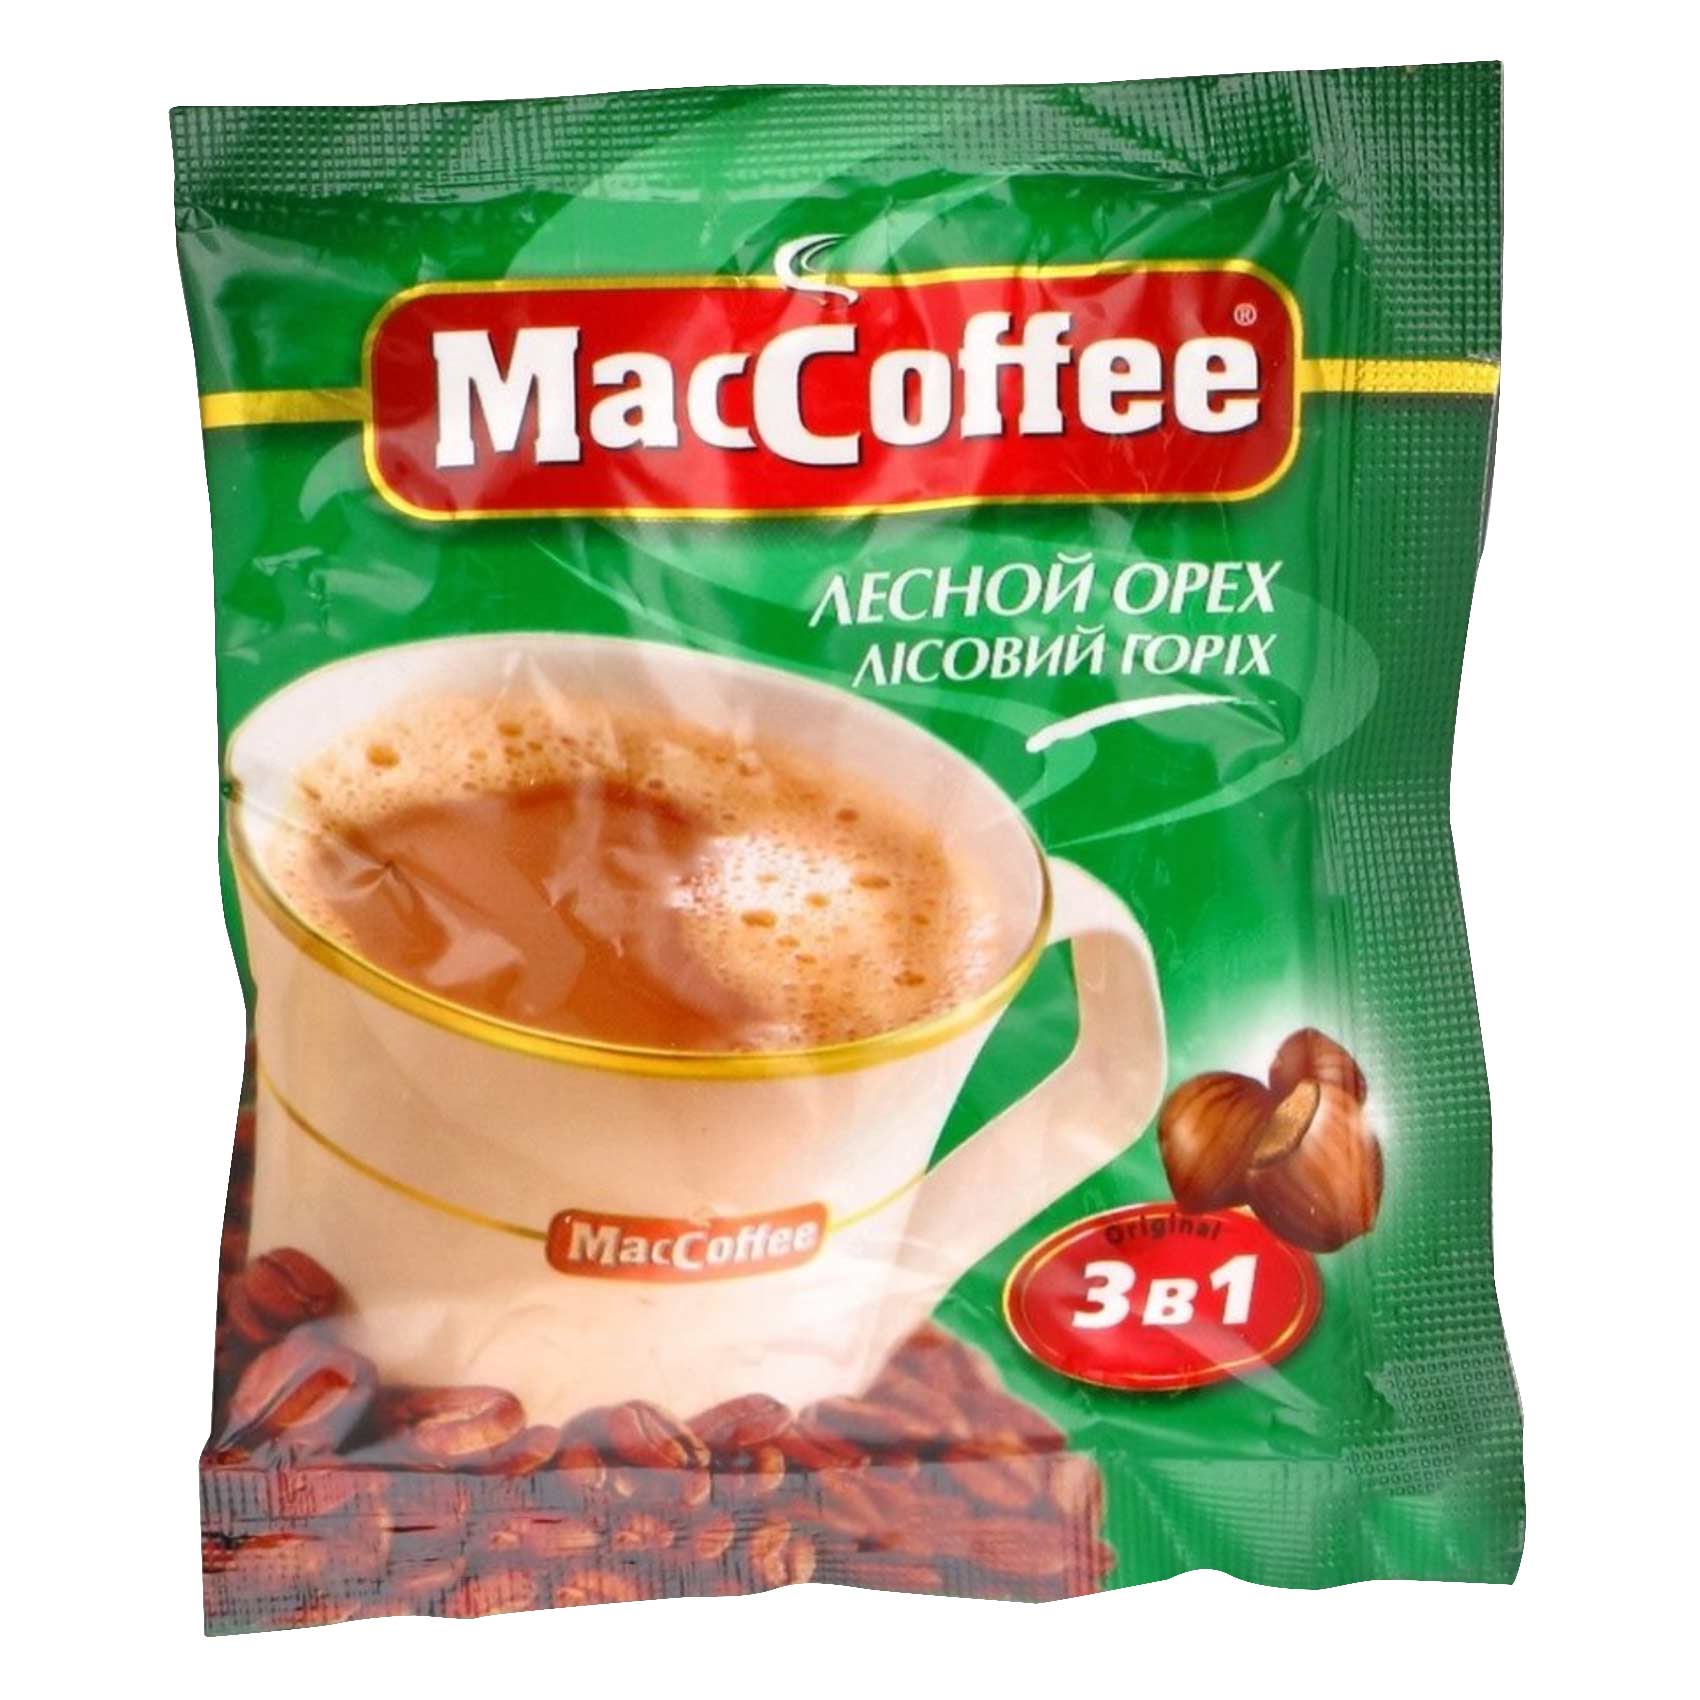 MacCoffee 3 In 1 Hazelnut Coffee 18g x Pack of 10